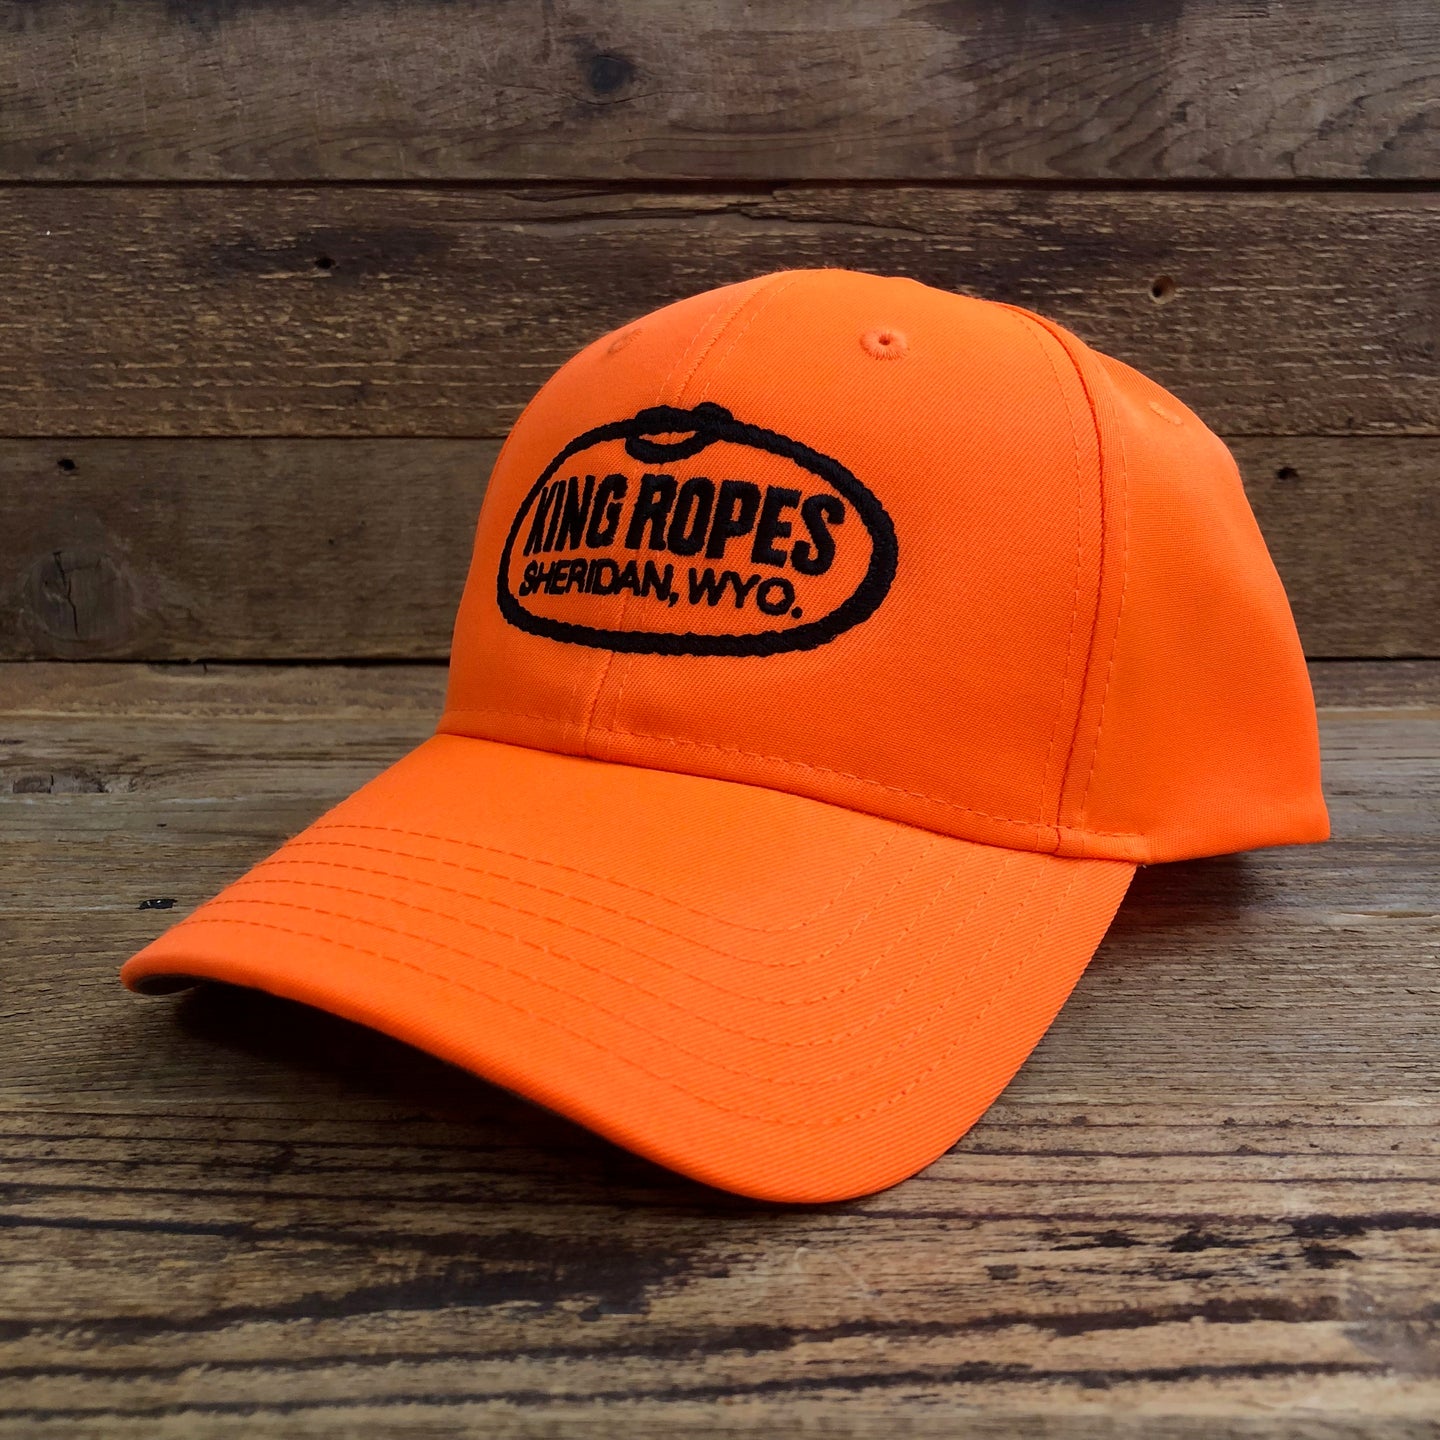 King Ropes Original 6 Panel Trucker Hat - Blaze Orange/Black